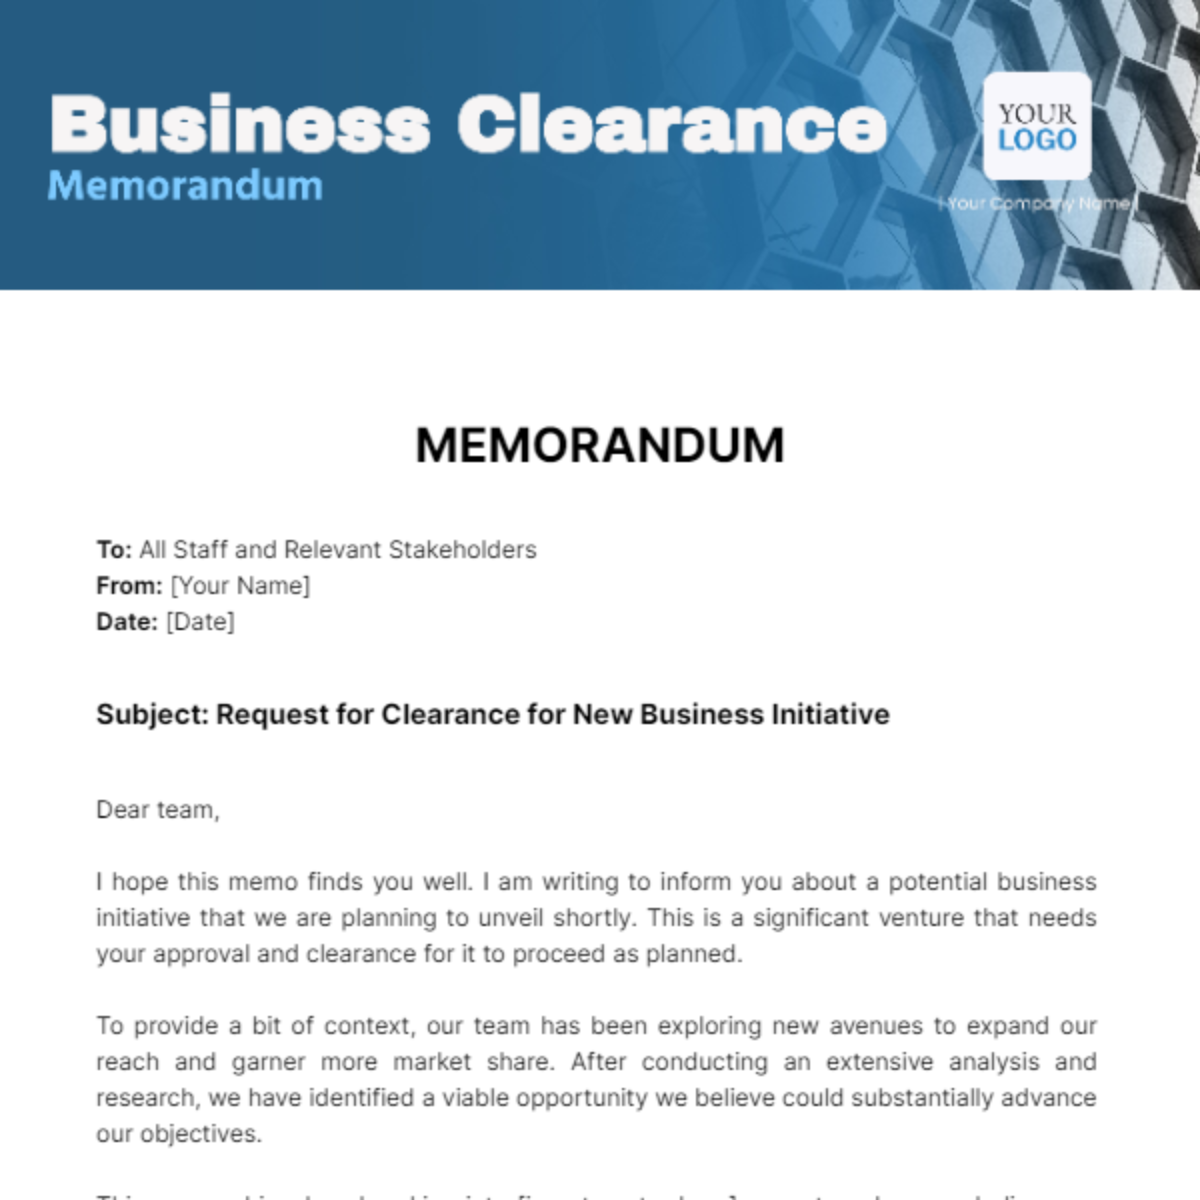 Business Clearance Memorandum